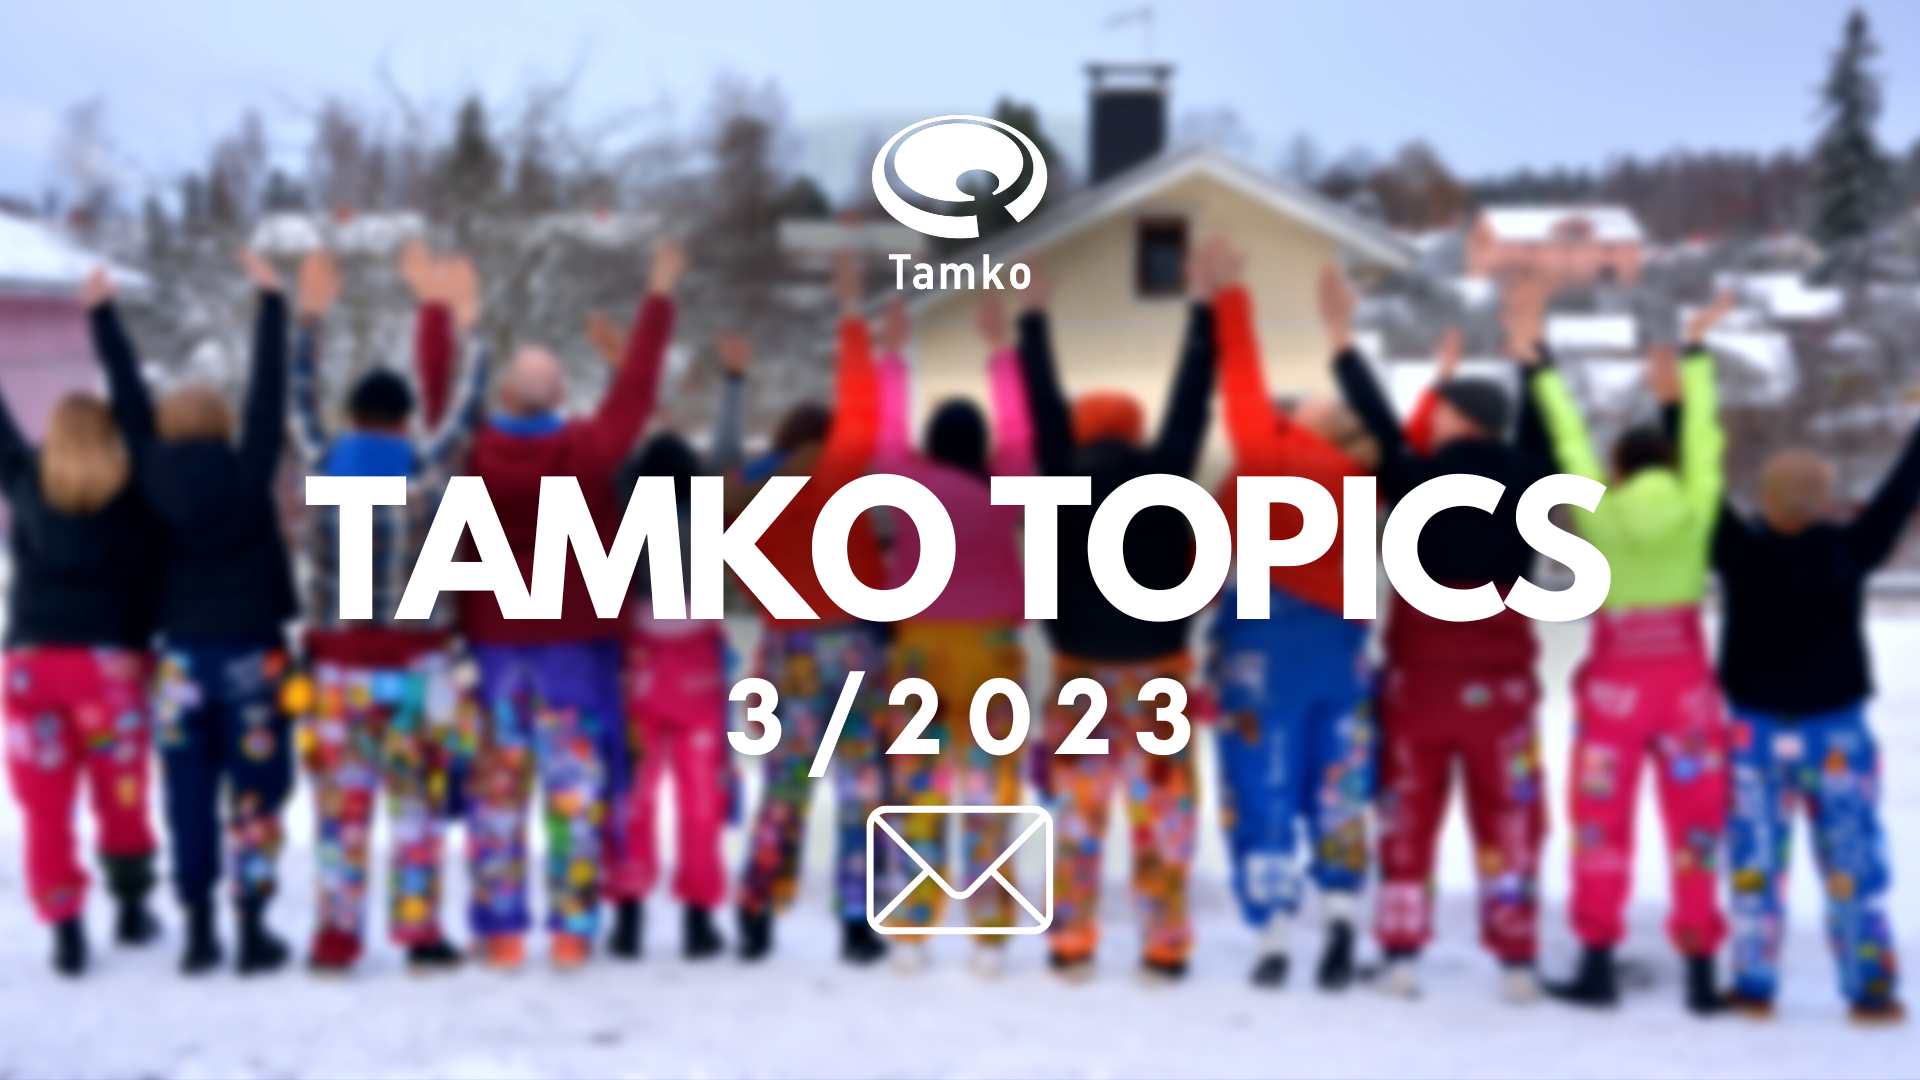 Tamko Topics 3/2023